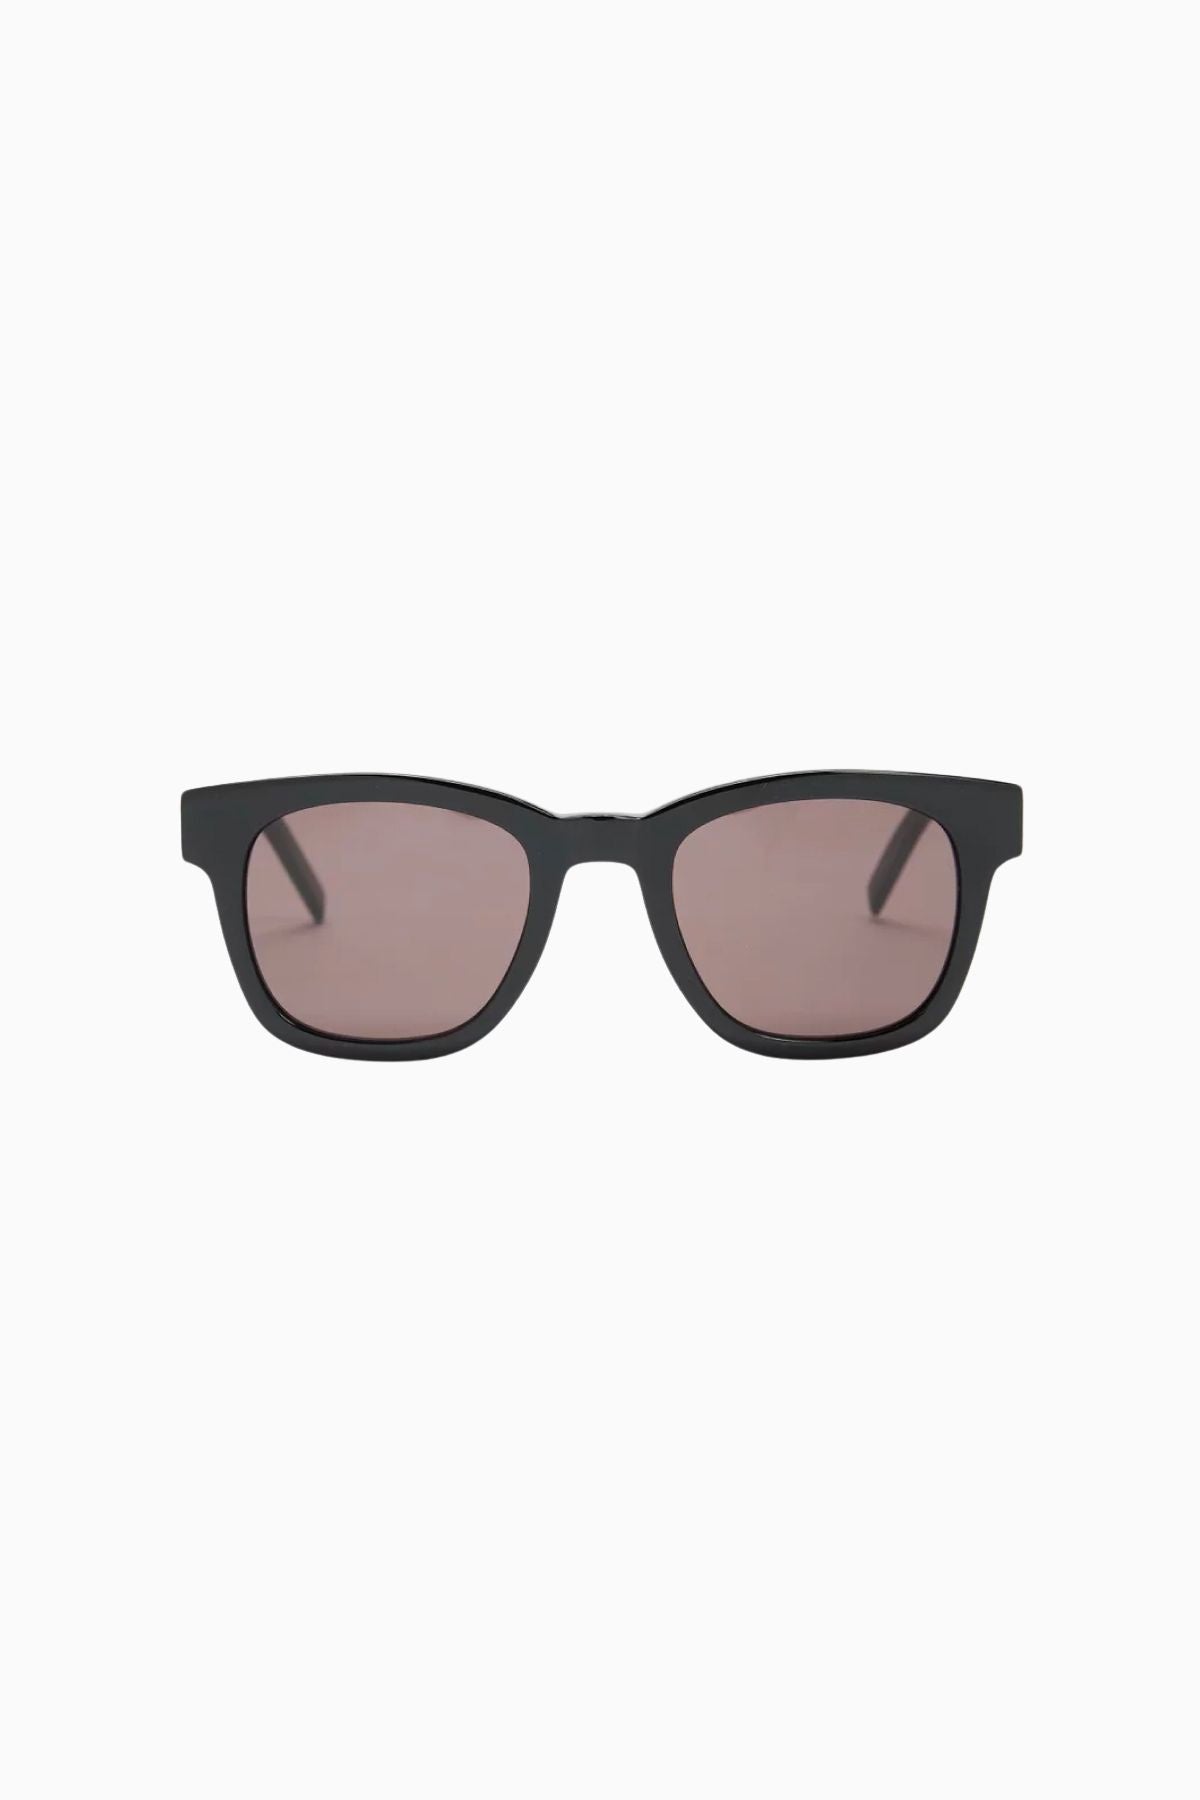 Saint Laurent Square Framed Sunglasses - Black